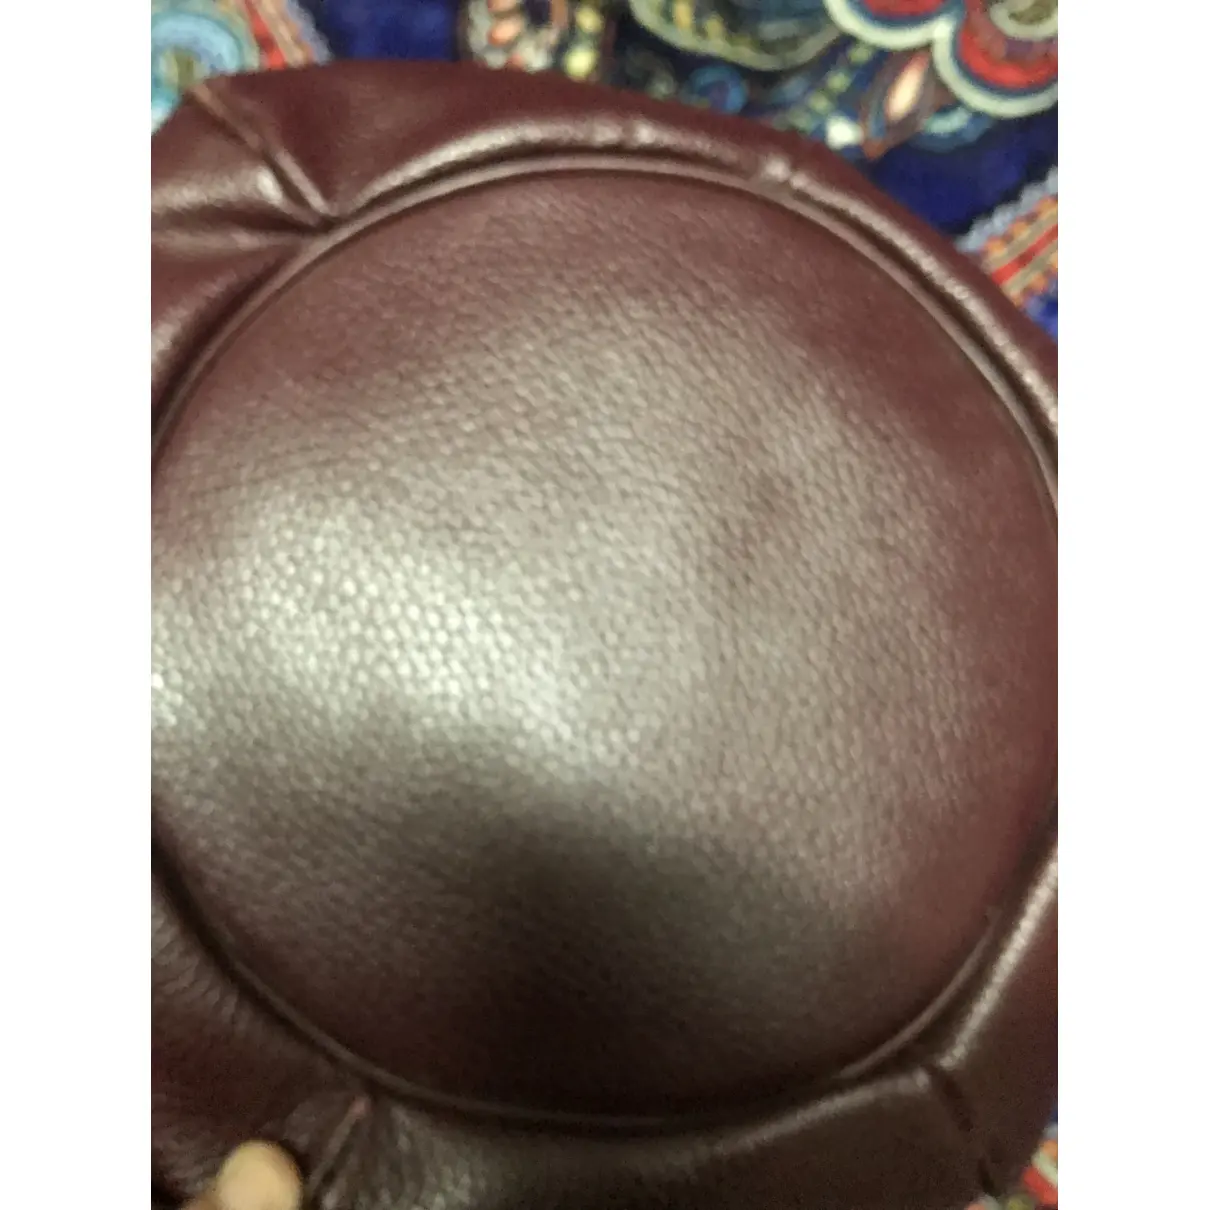 Seau leather handbag Cartier